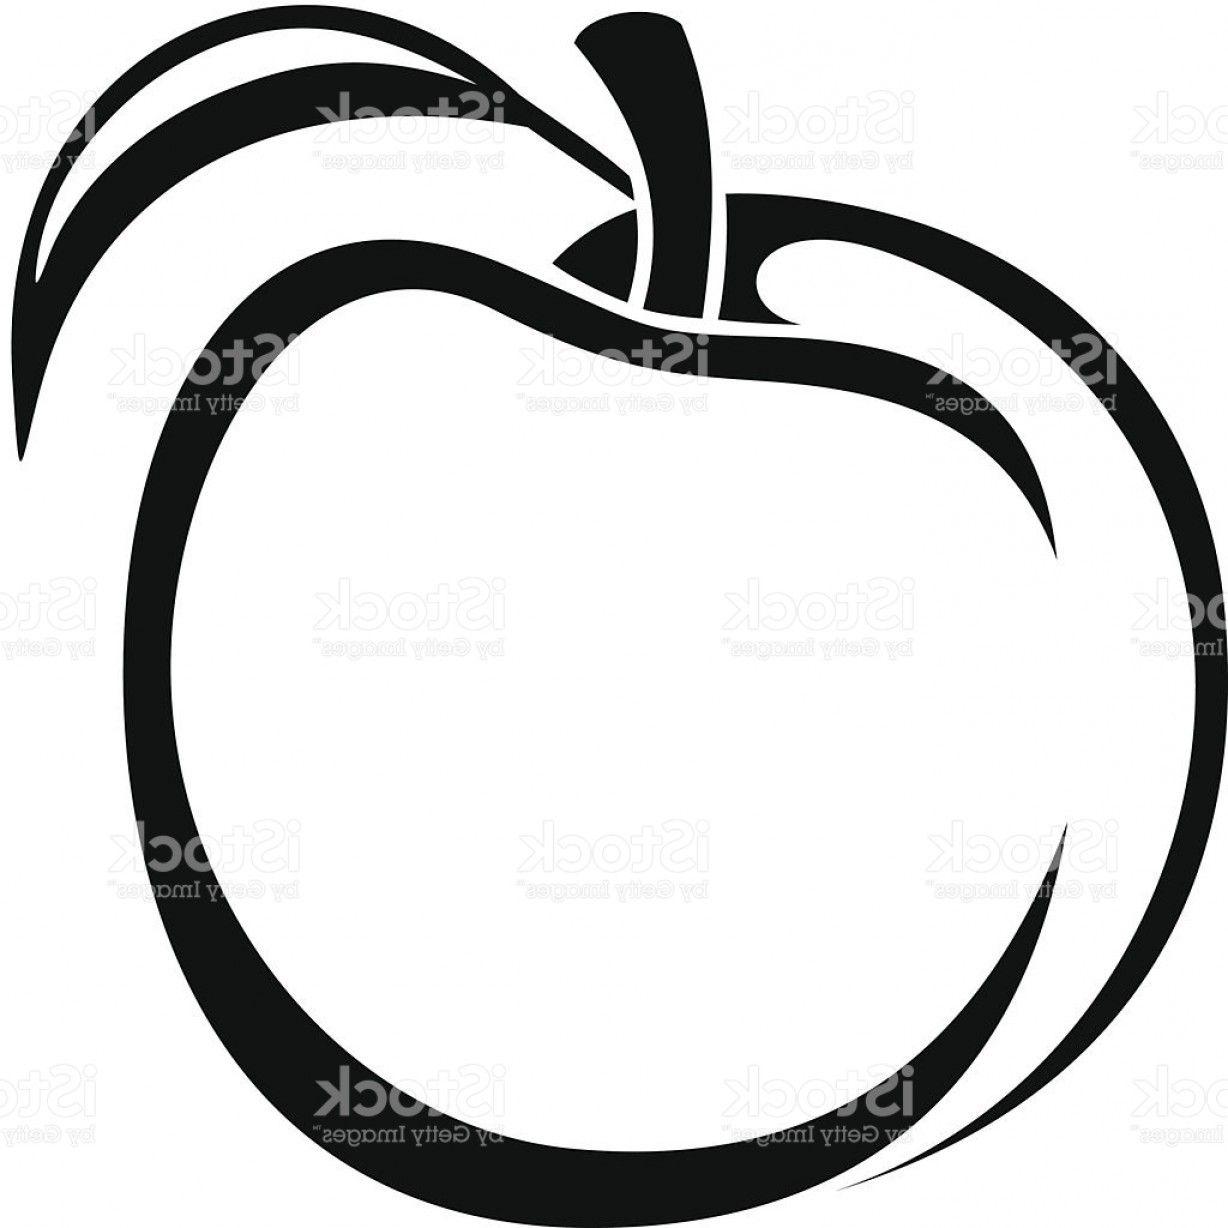 Peach Vector Logo - Peach Emoji Vector at GetDrawings.com | Free for personal use Peach ...